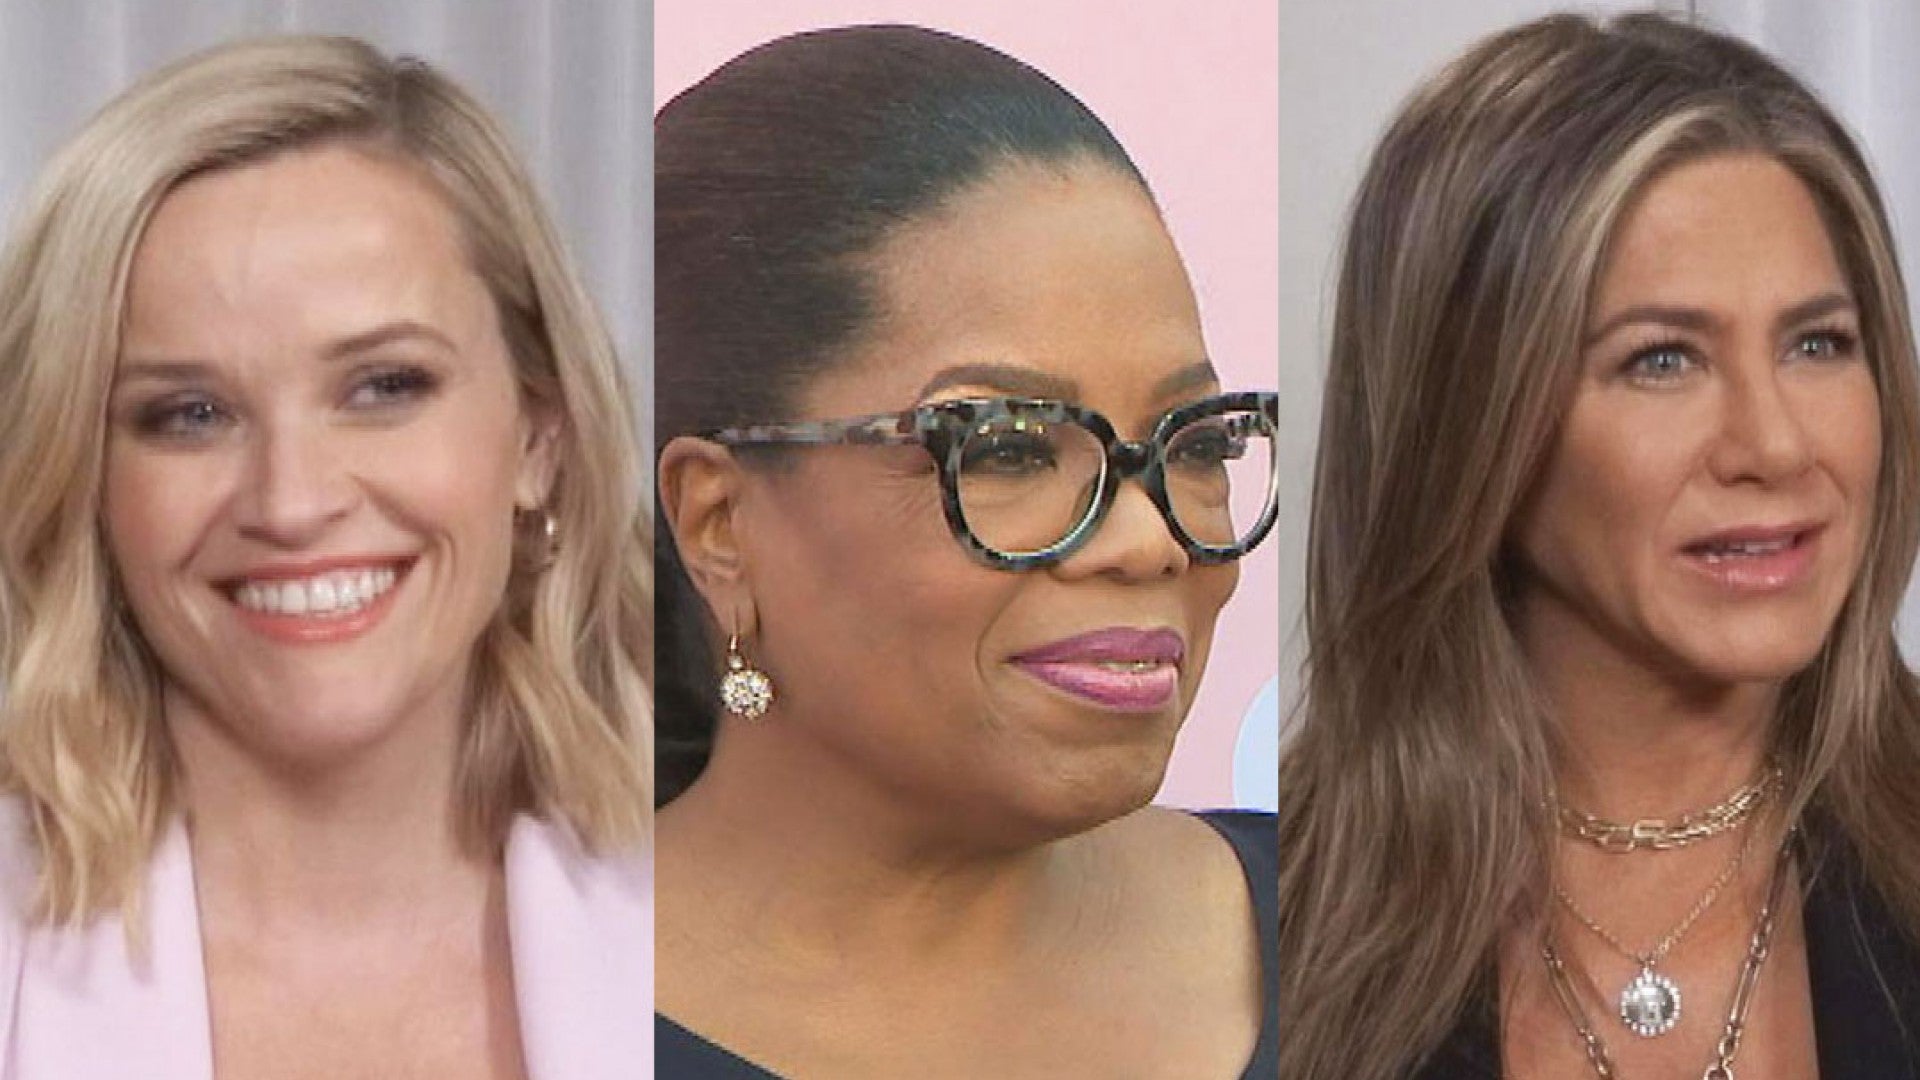 Oprah Winfrey: I thought about calling Jennifer Aniston or Tom